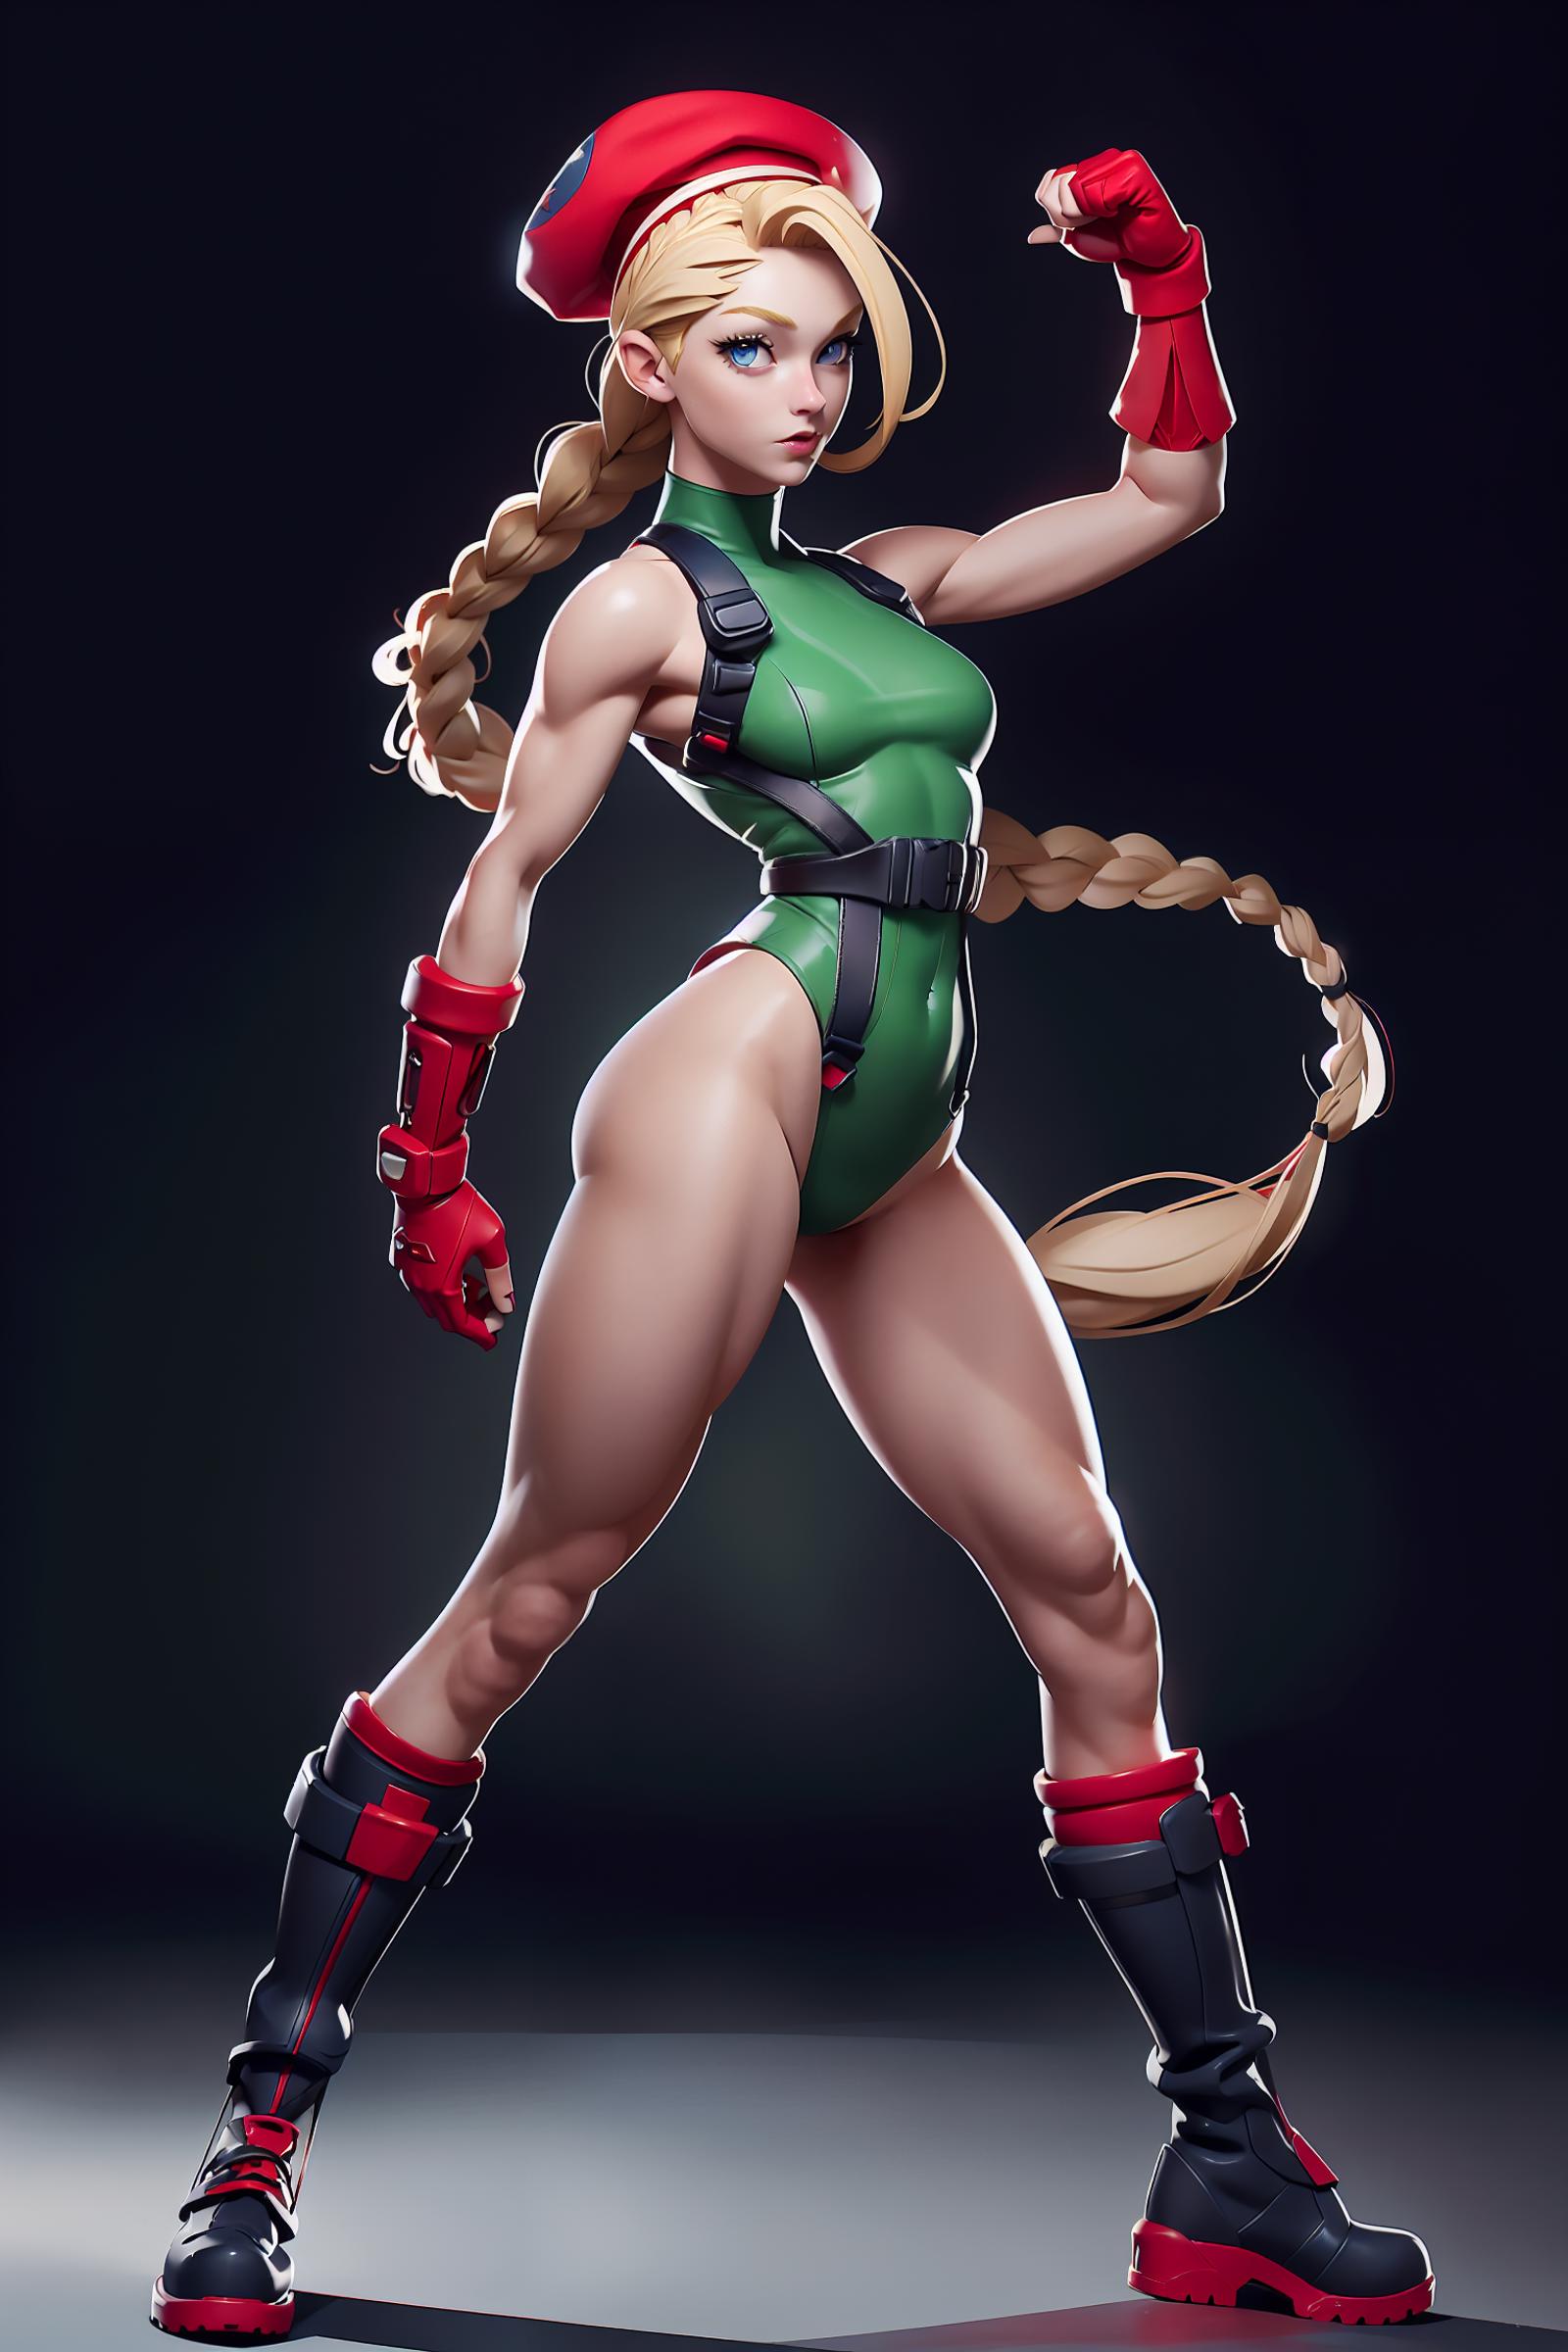 Cammy White / Street Fighter image by StalkerLegend